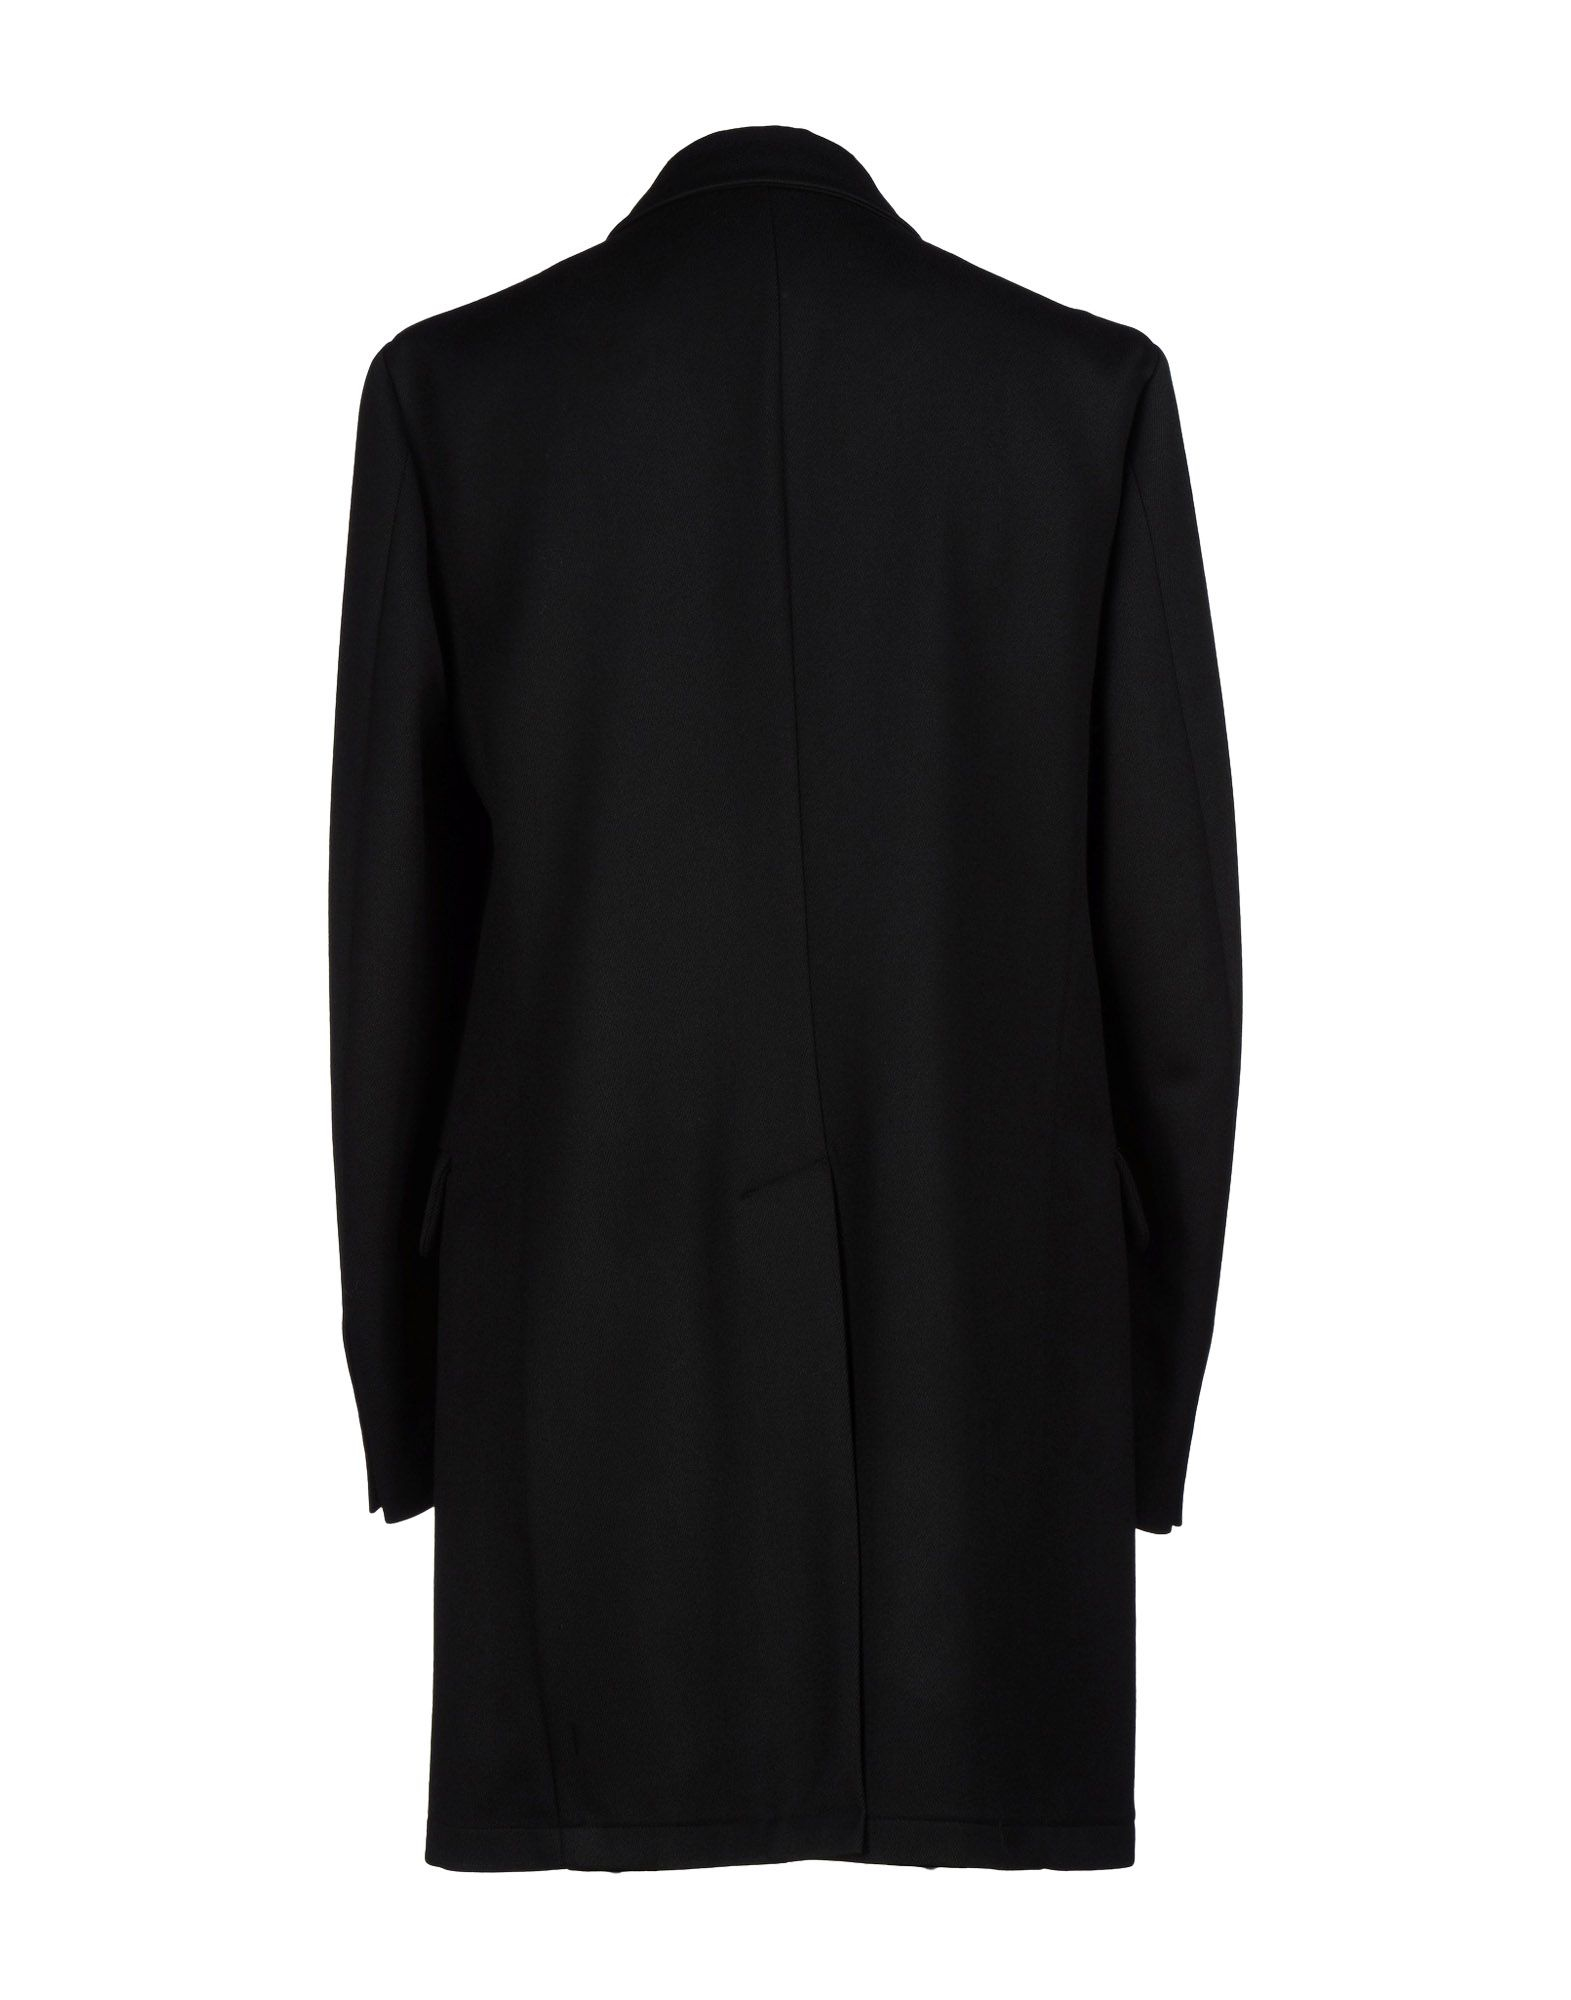 Lyst - Marithé Et François Girbaud Coat in Black for Men